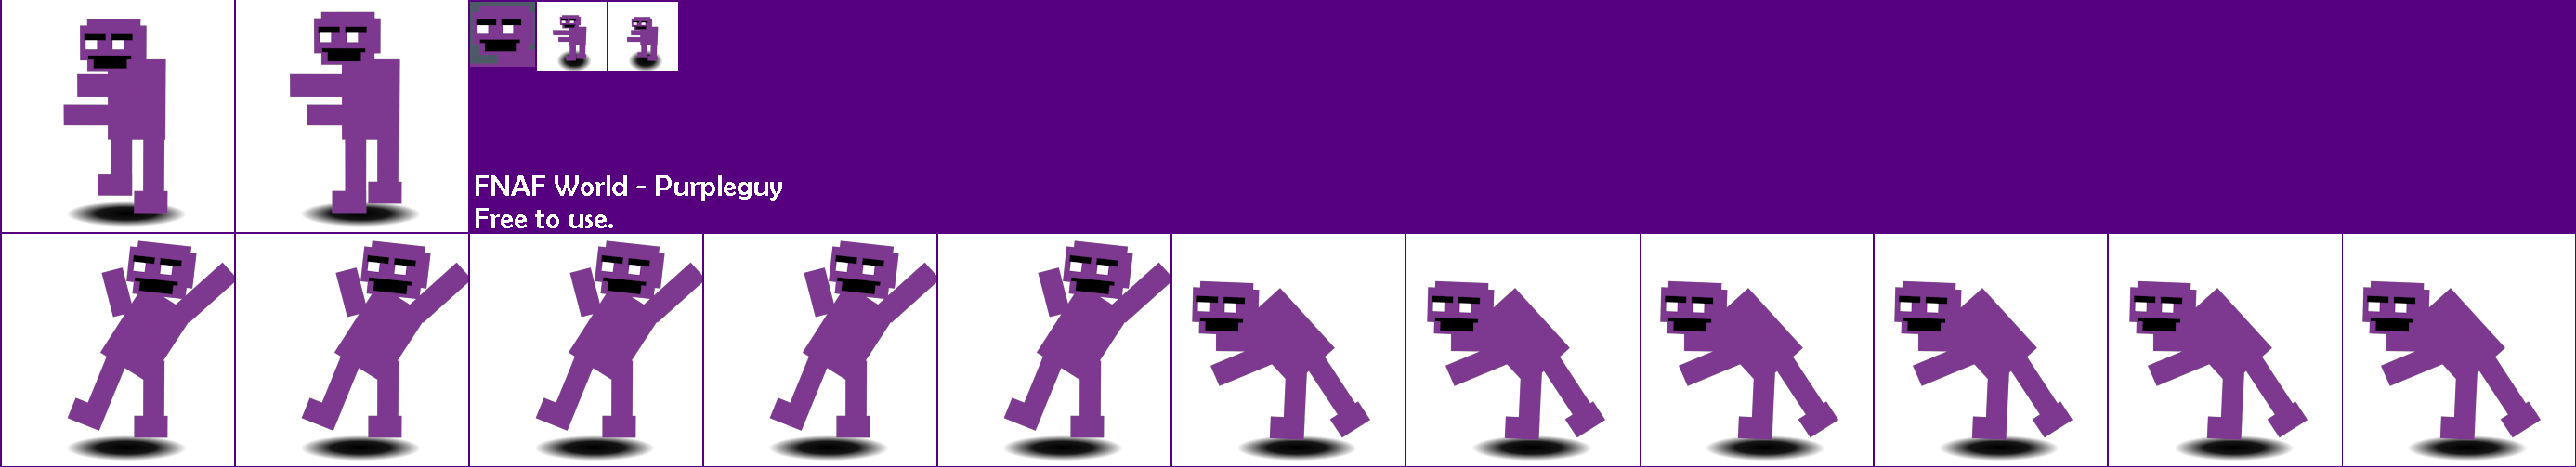 Purpleguy